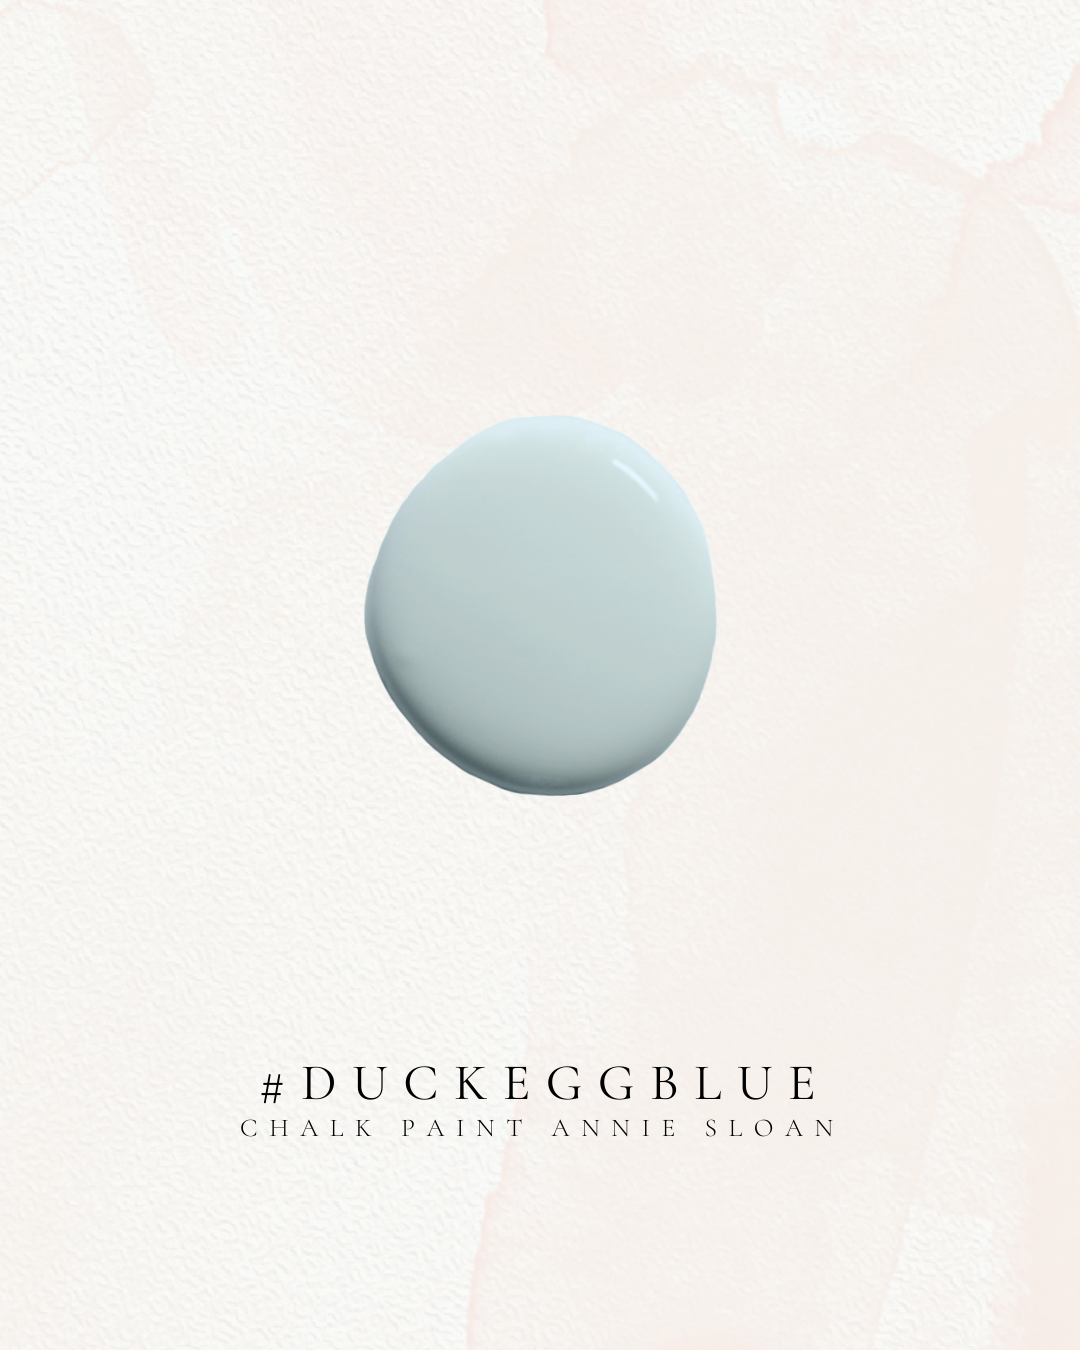 Duck Egg Blue Chalk Paint Annie Sloan instagram